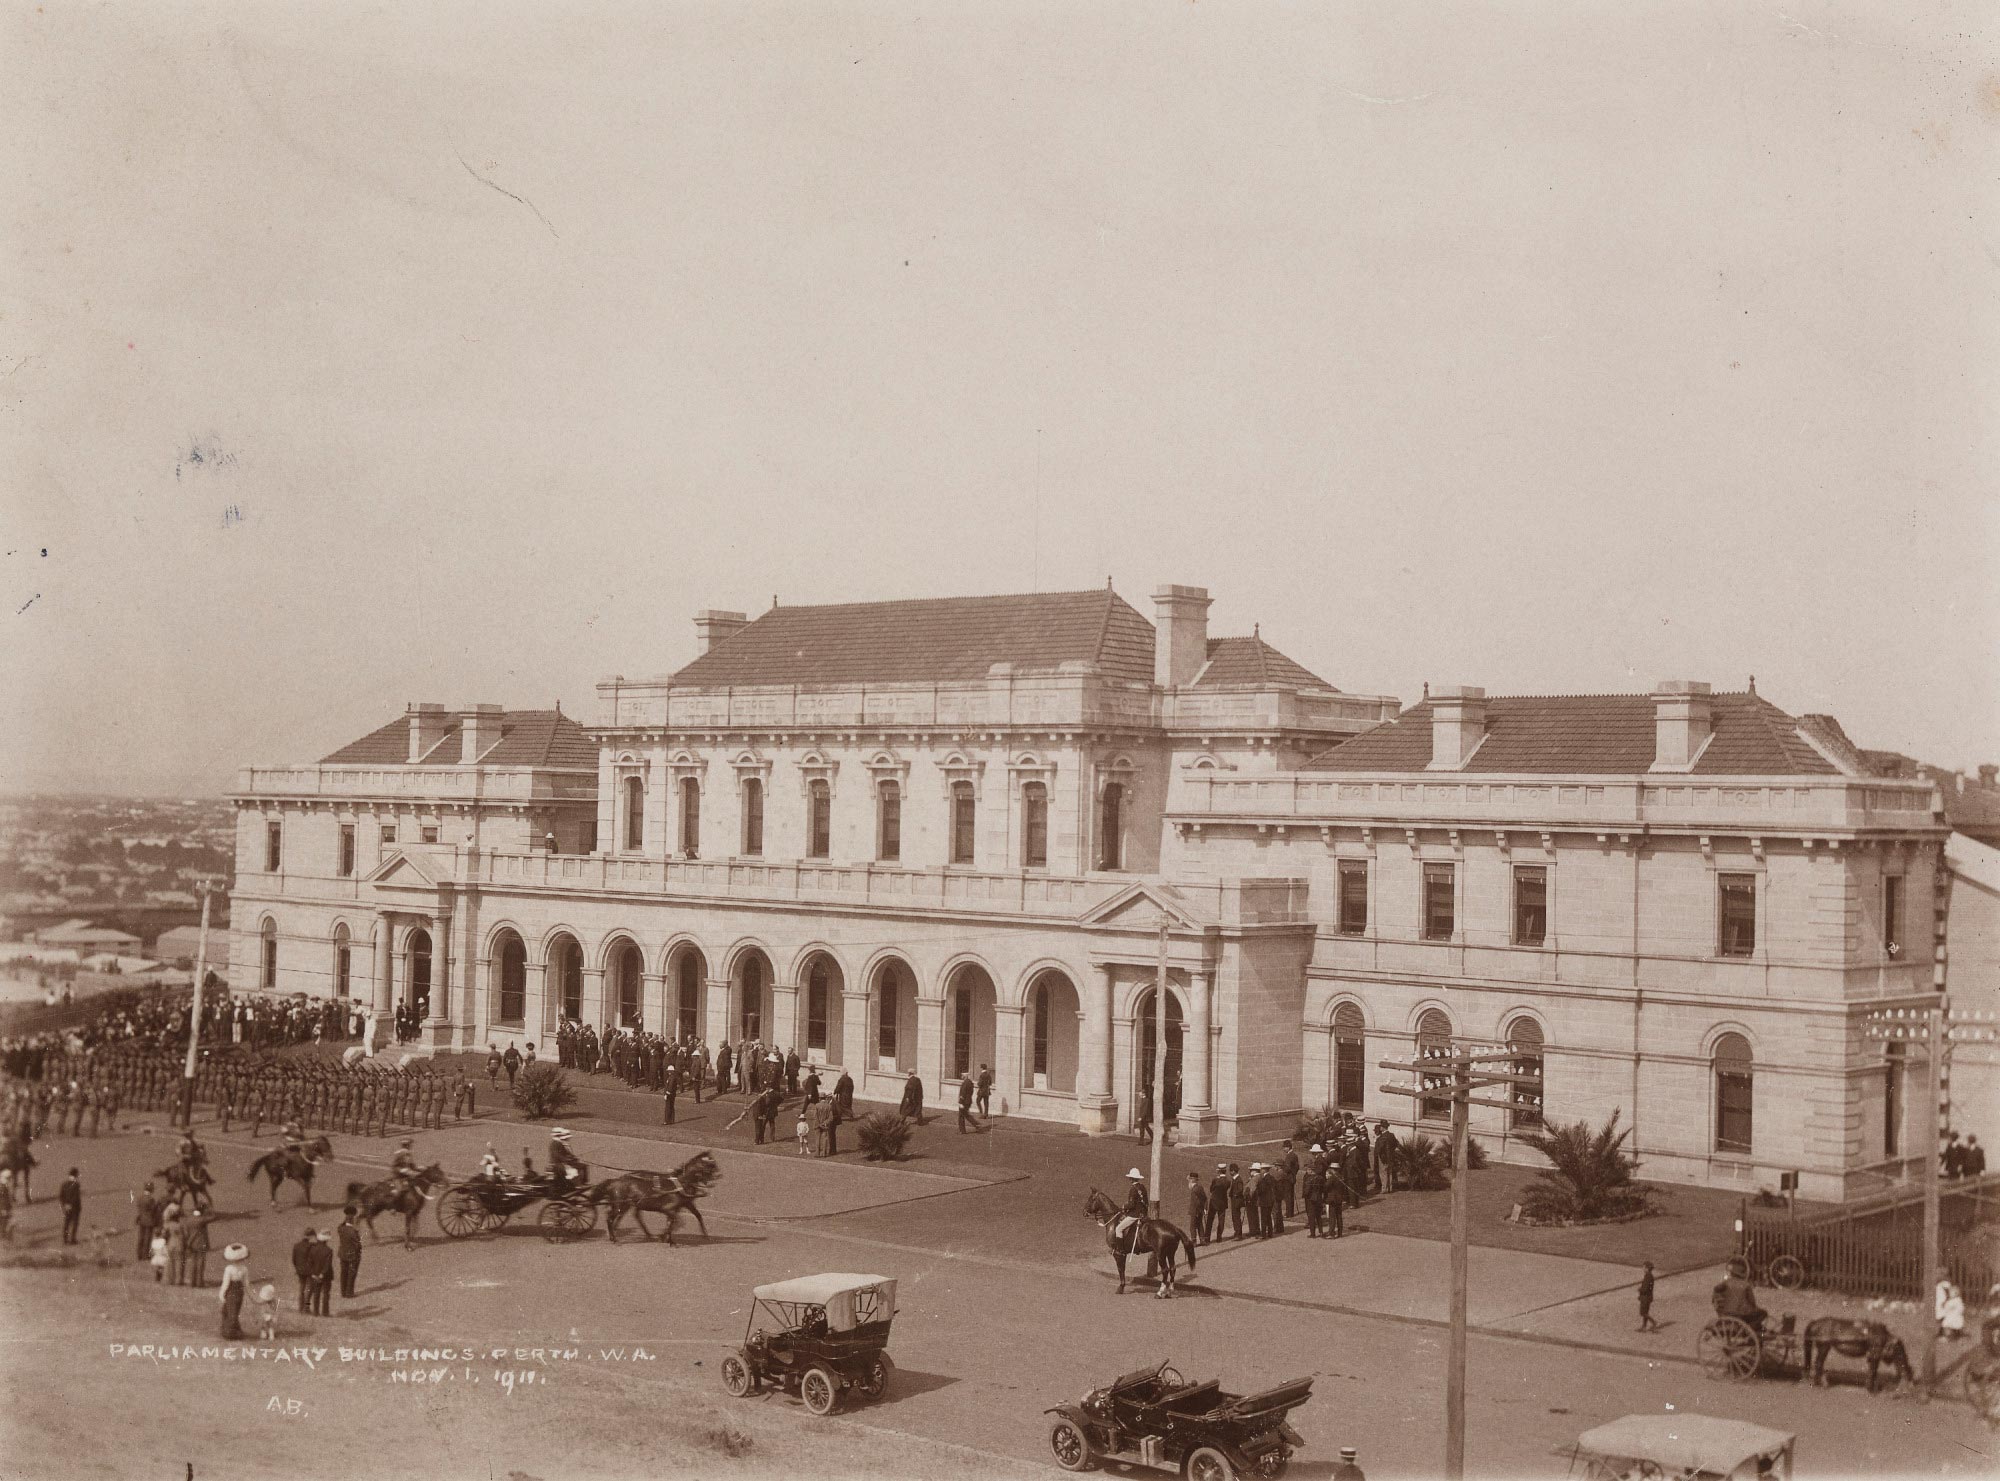 Parliament House, Perth, Western Australia, 1918.